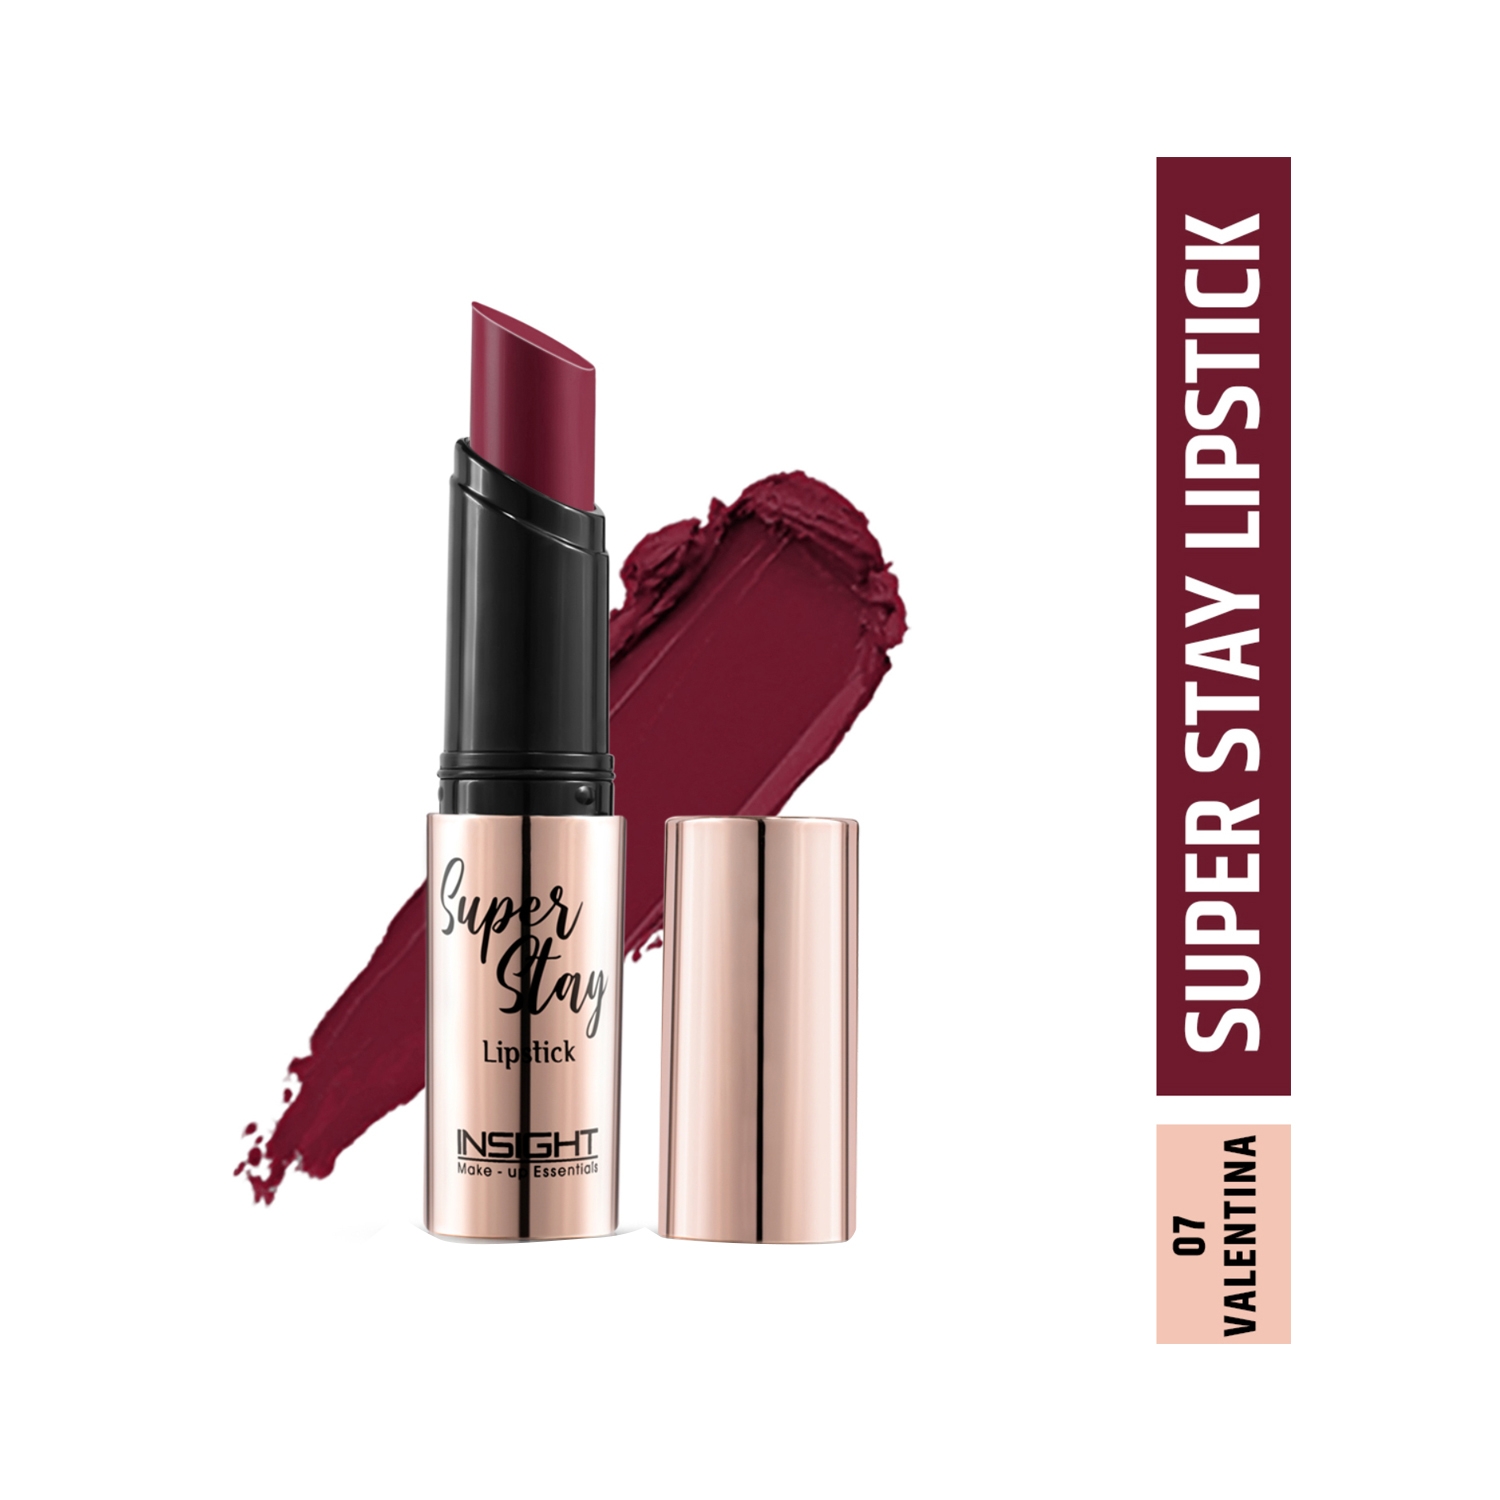 Insight Cosmetics | Insight Cosmetics Super Stay Lipstick - 07 Valentina (7g)